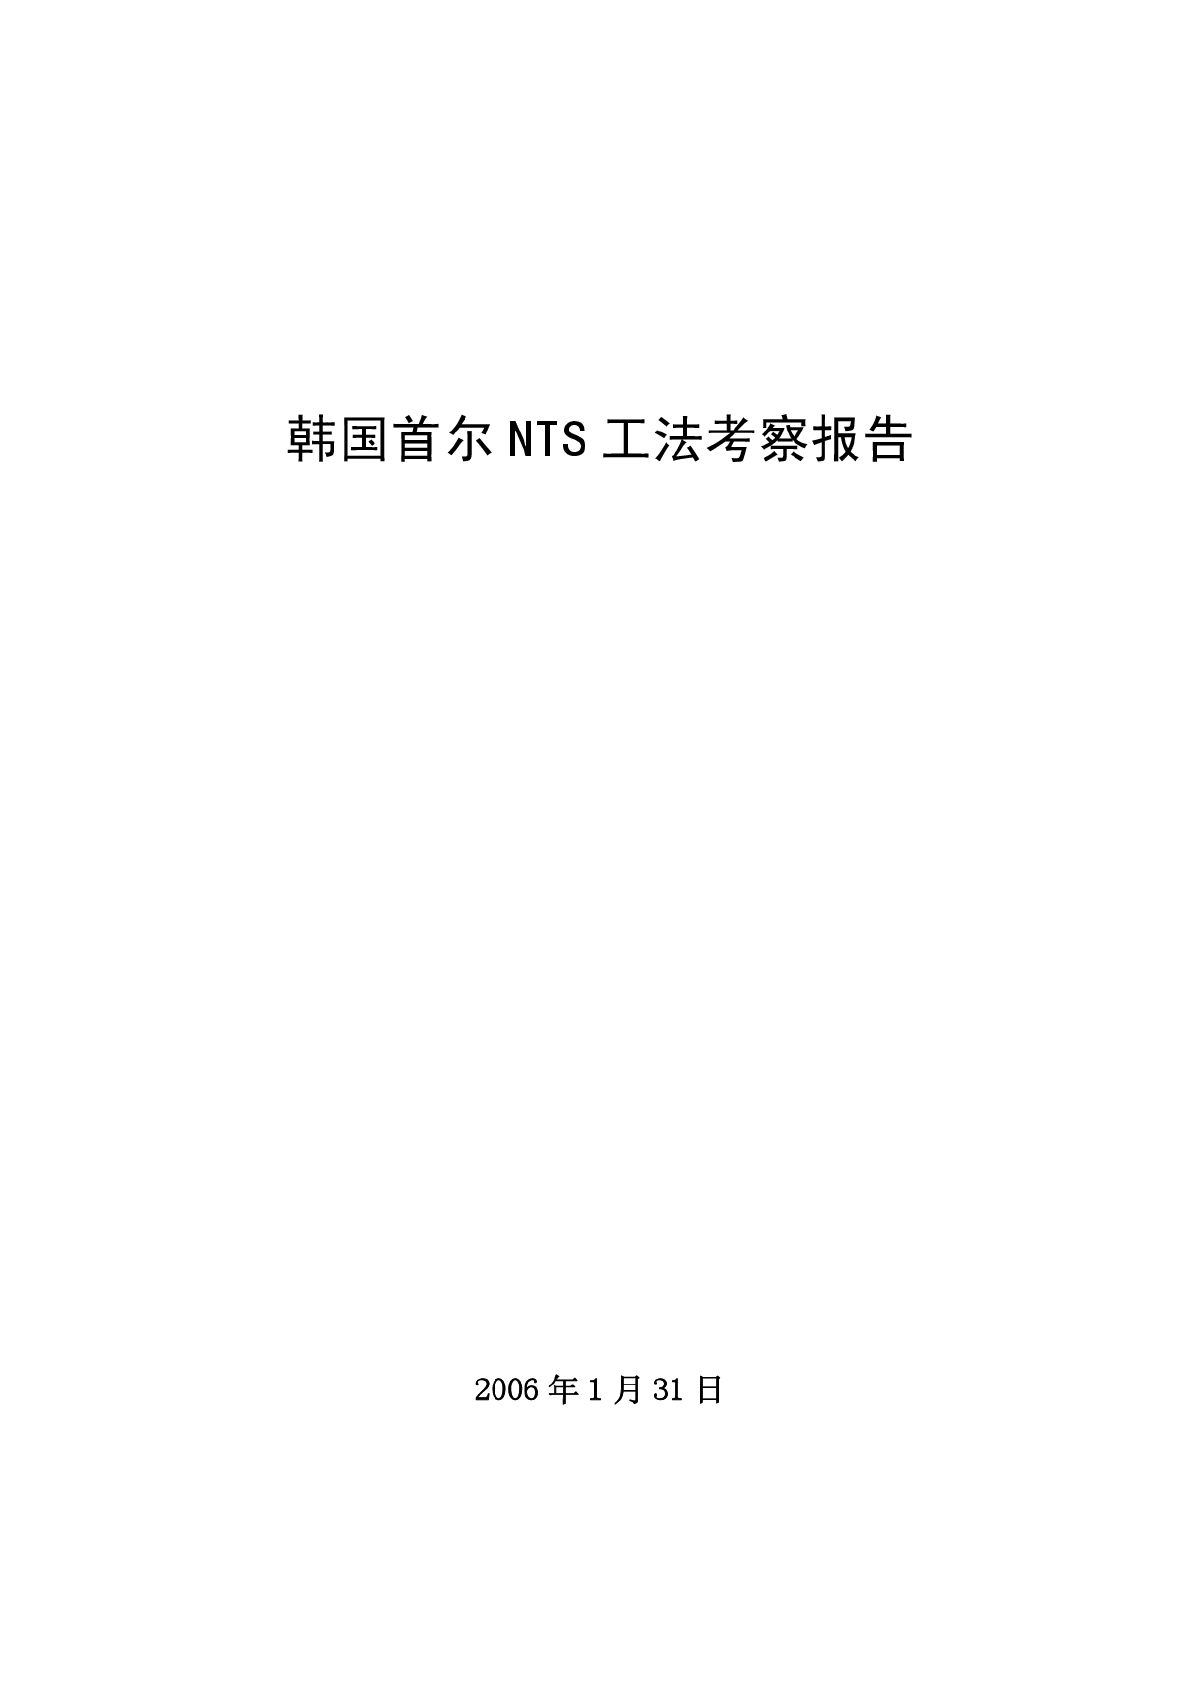 NTR工法简介(韩国首尔考察报告)